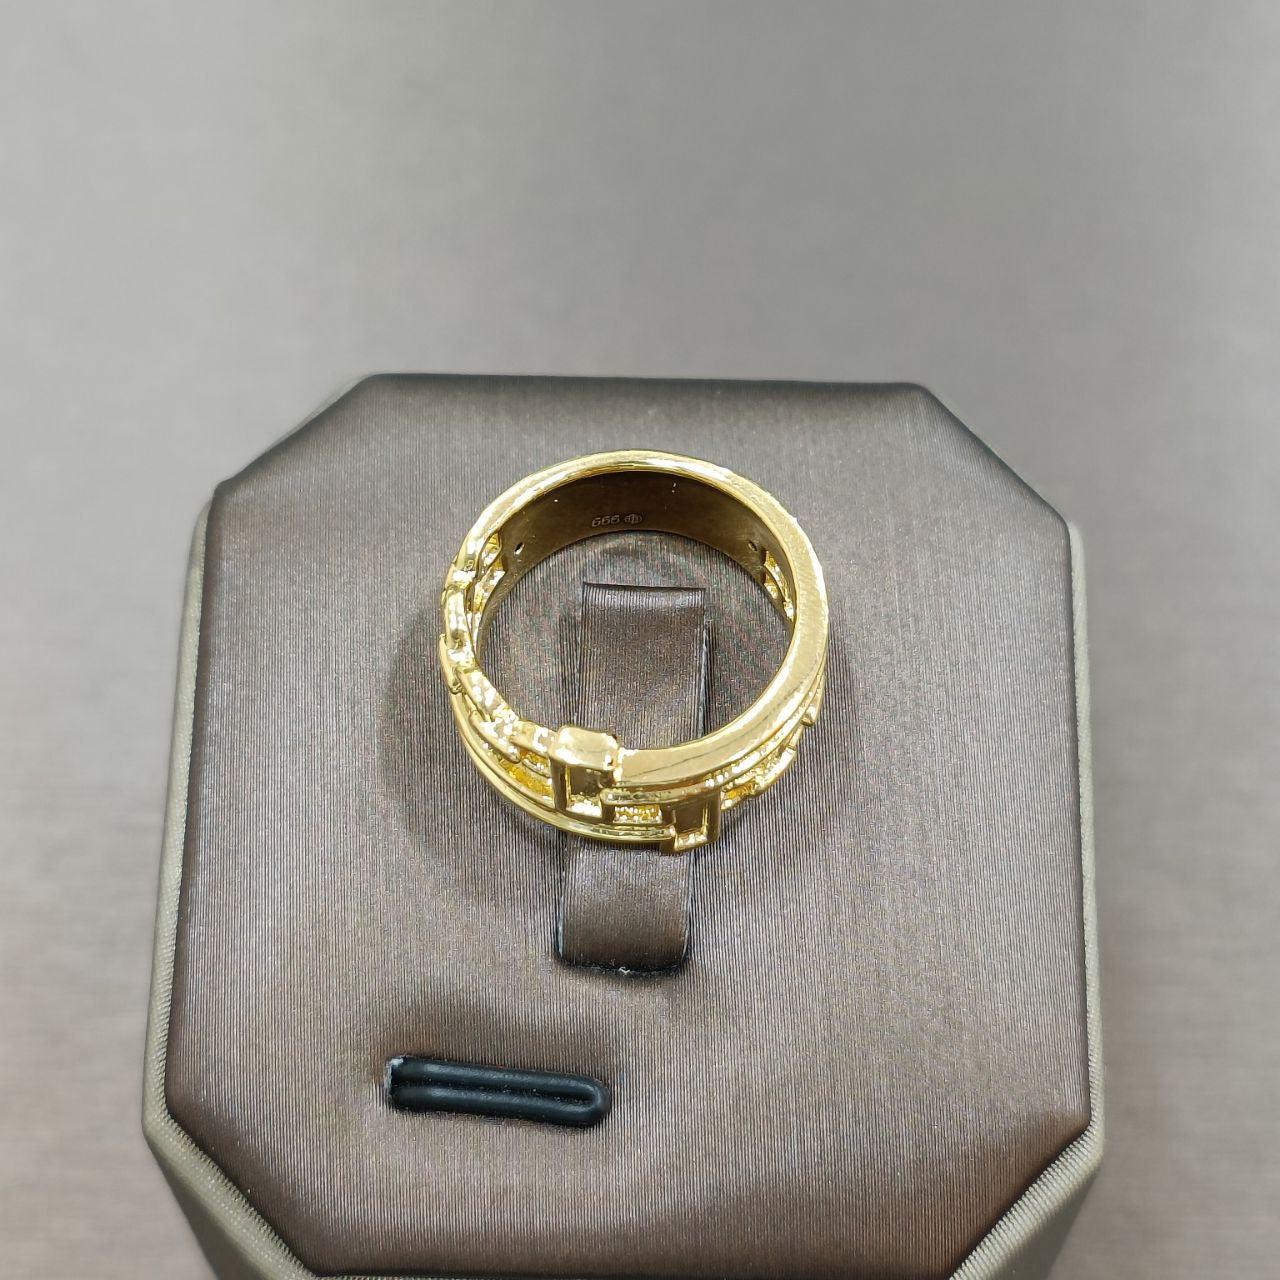 24k / 999 Gold T Chain Design Ring-999 gold-Best Gold Shop